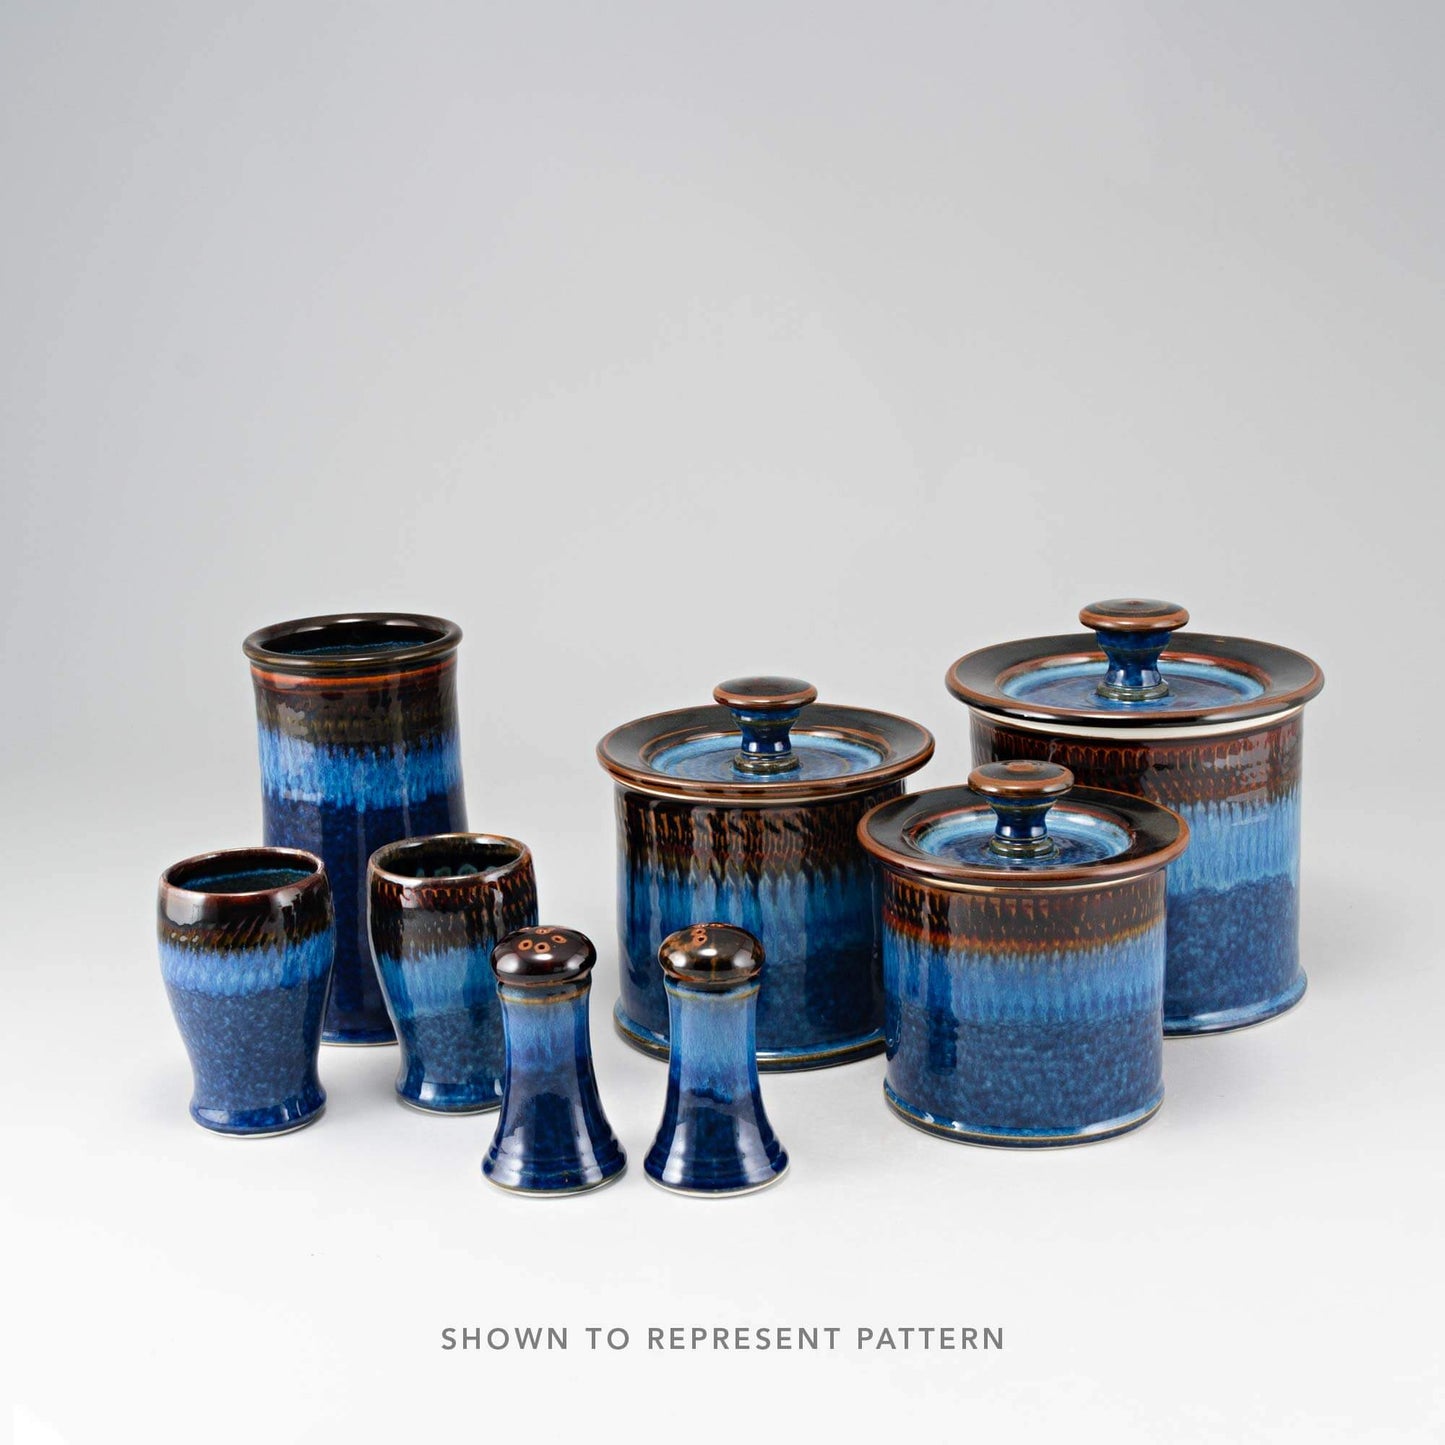 Handmade Pottery Handled Ramekin in Blue Hamada pattern made by Georgetown Pottery in Maine